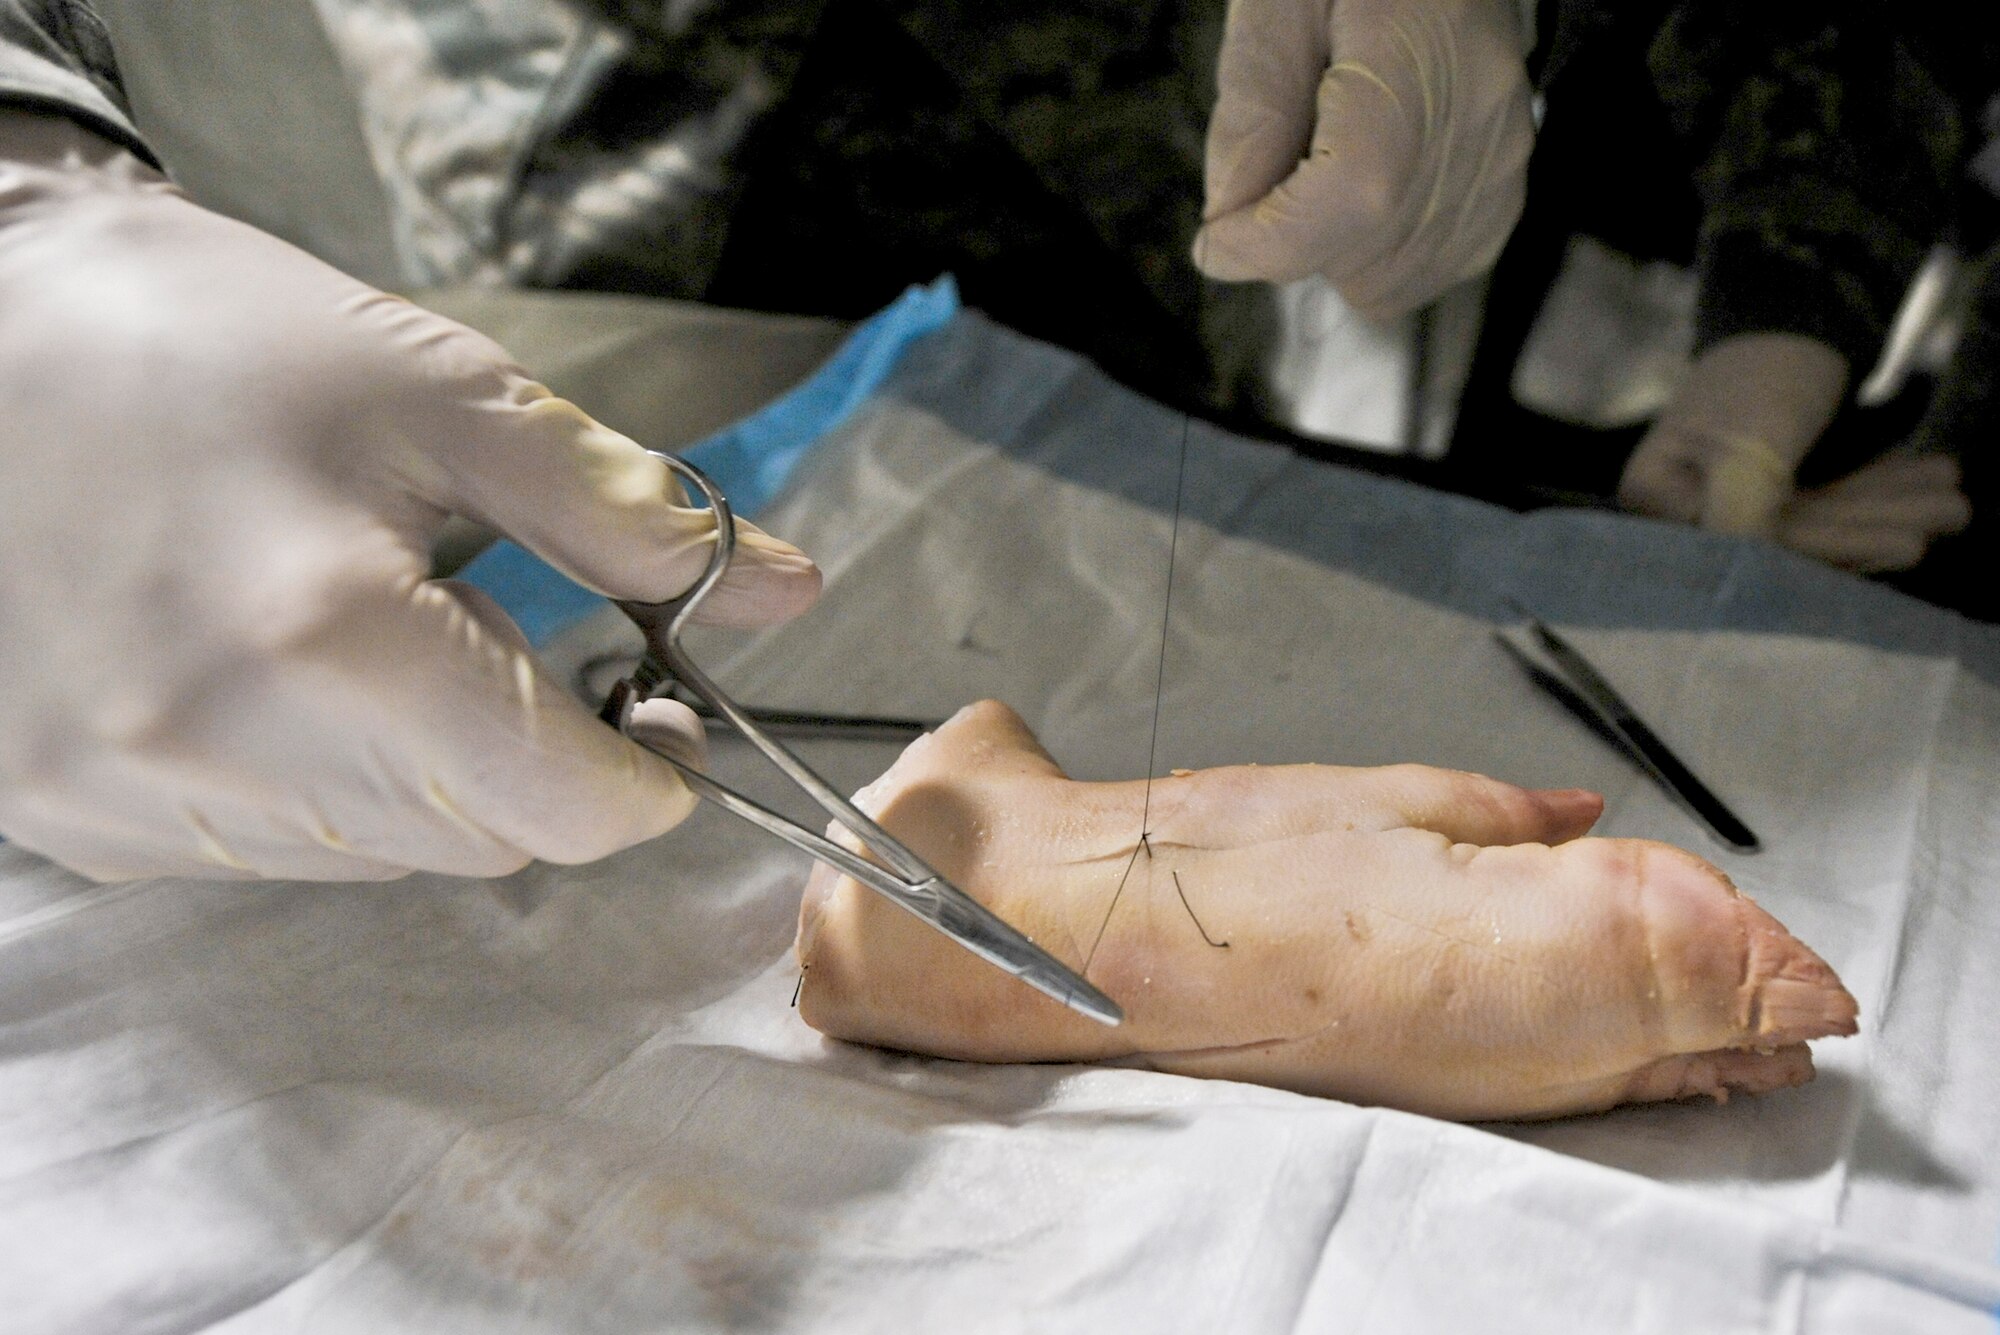 Master Sgt. Jason Bradley demonstrates, using a pig's foot, the proper way to suture Aug. 12, 2010, at Joint Base Elmendorf-Richardson, Alaska. (U.S. Air Force photo/Airman 1st Class Christopher Gross) 